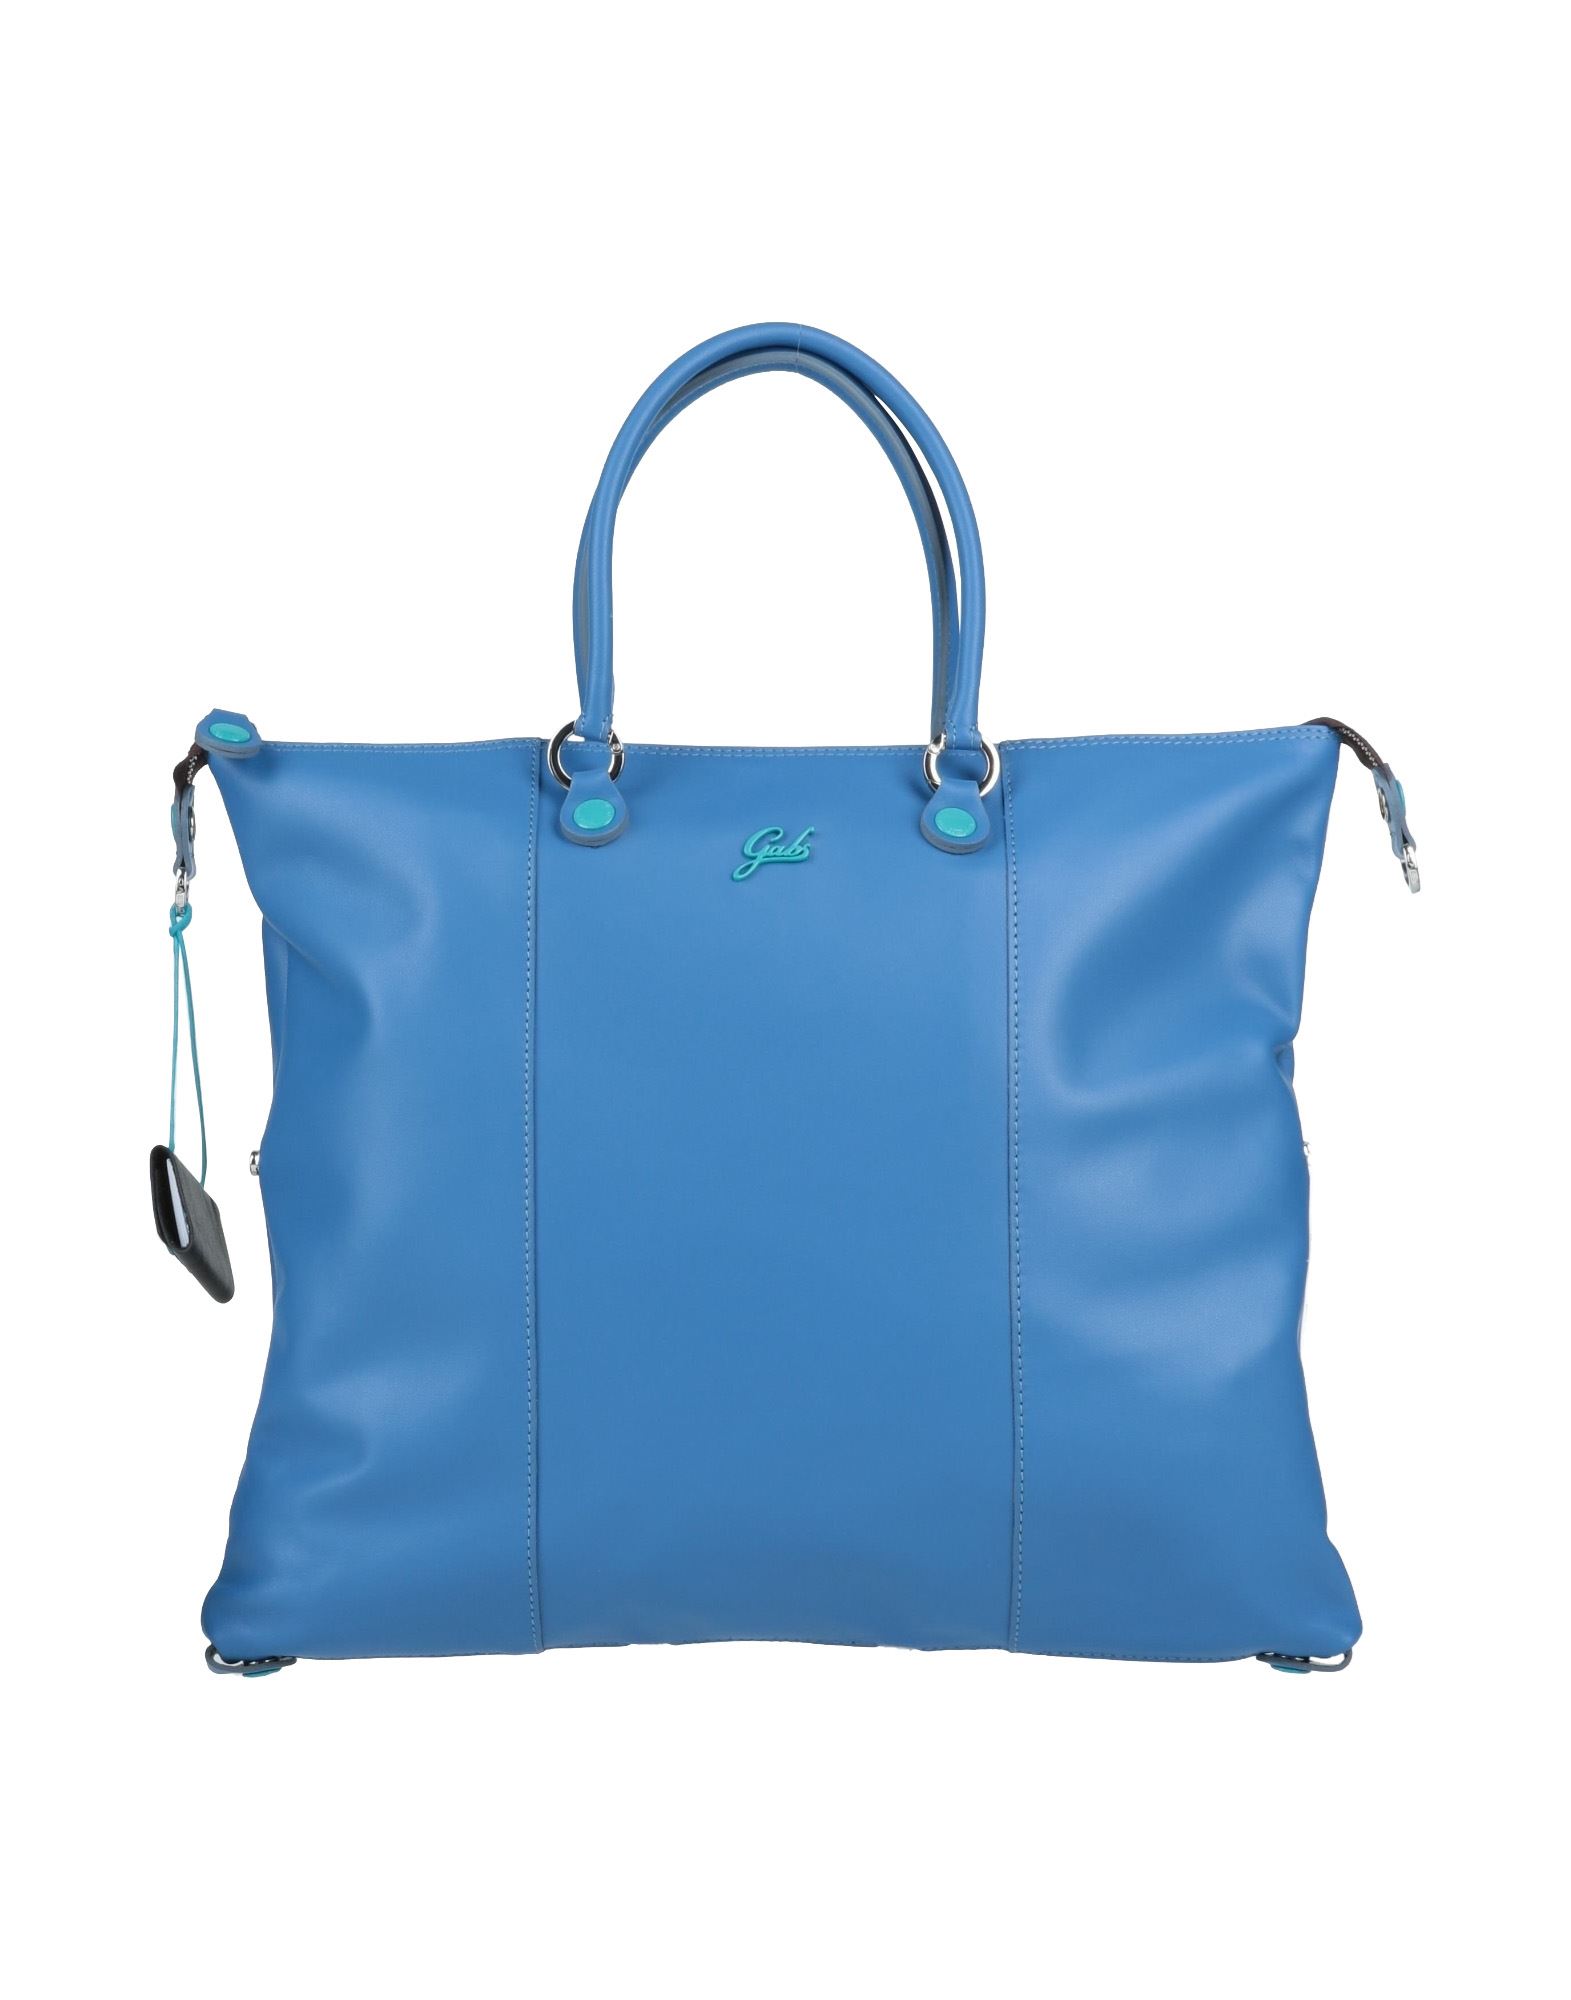 Gabs Handbags In Blue